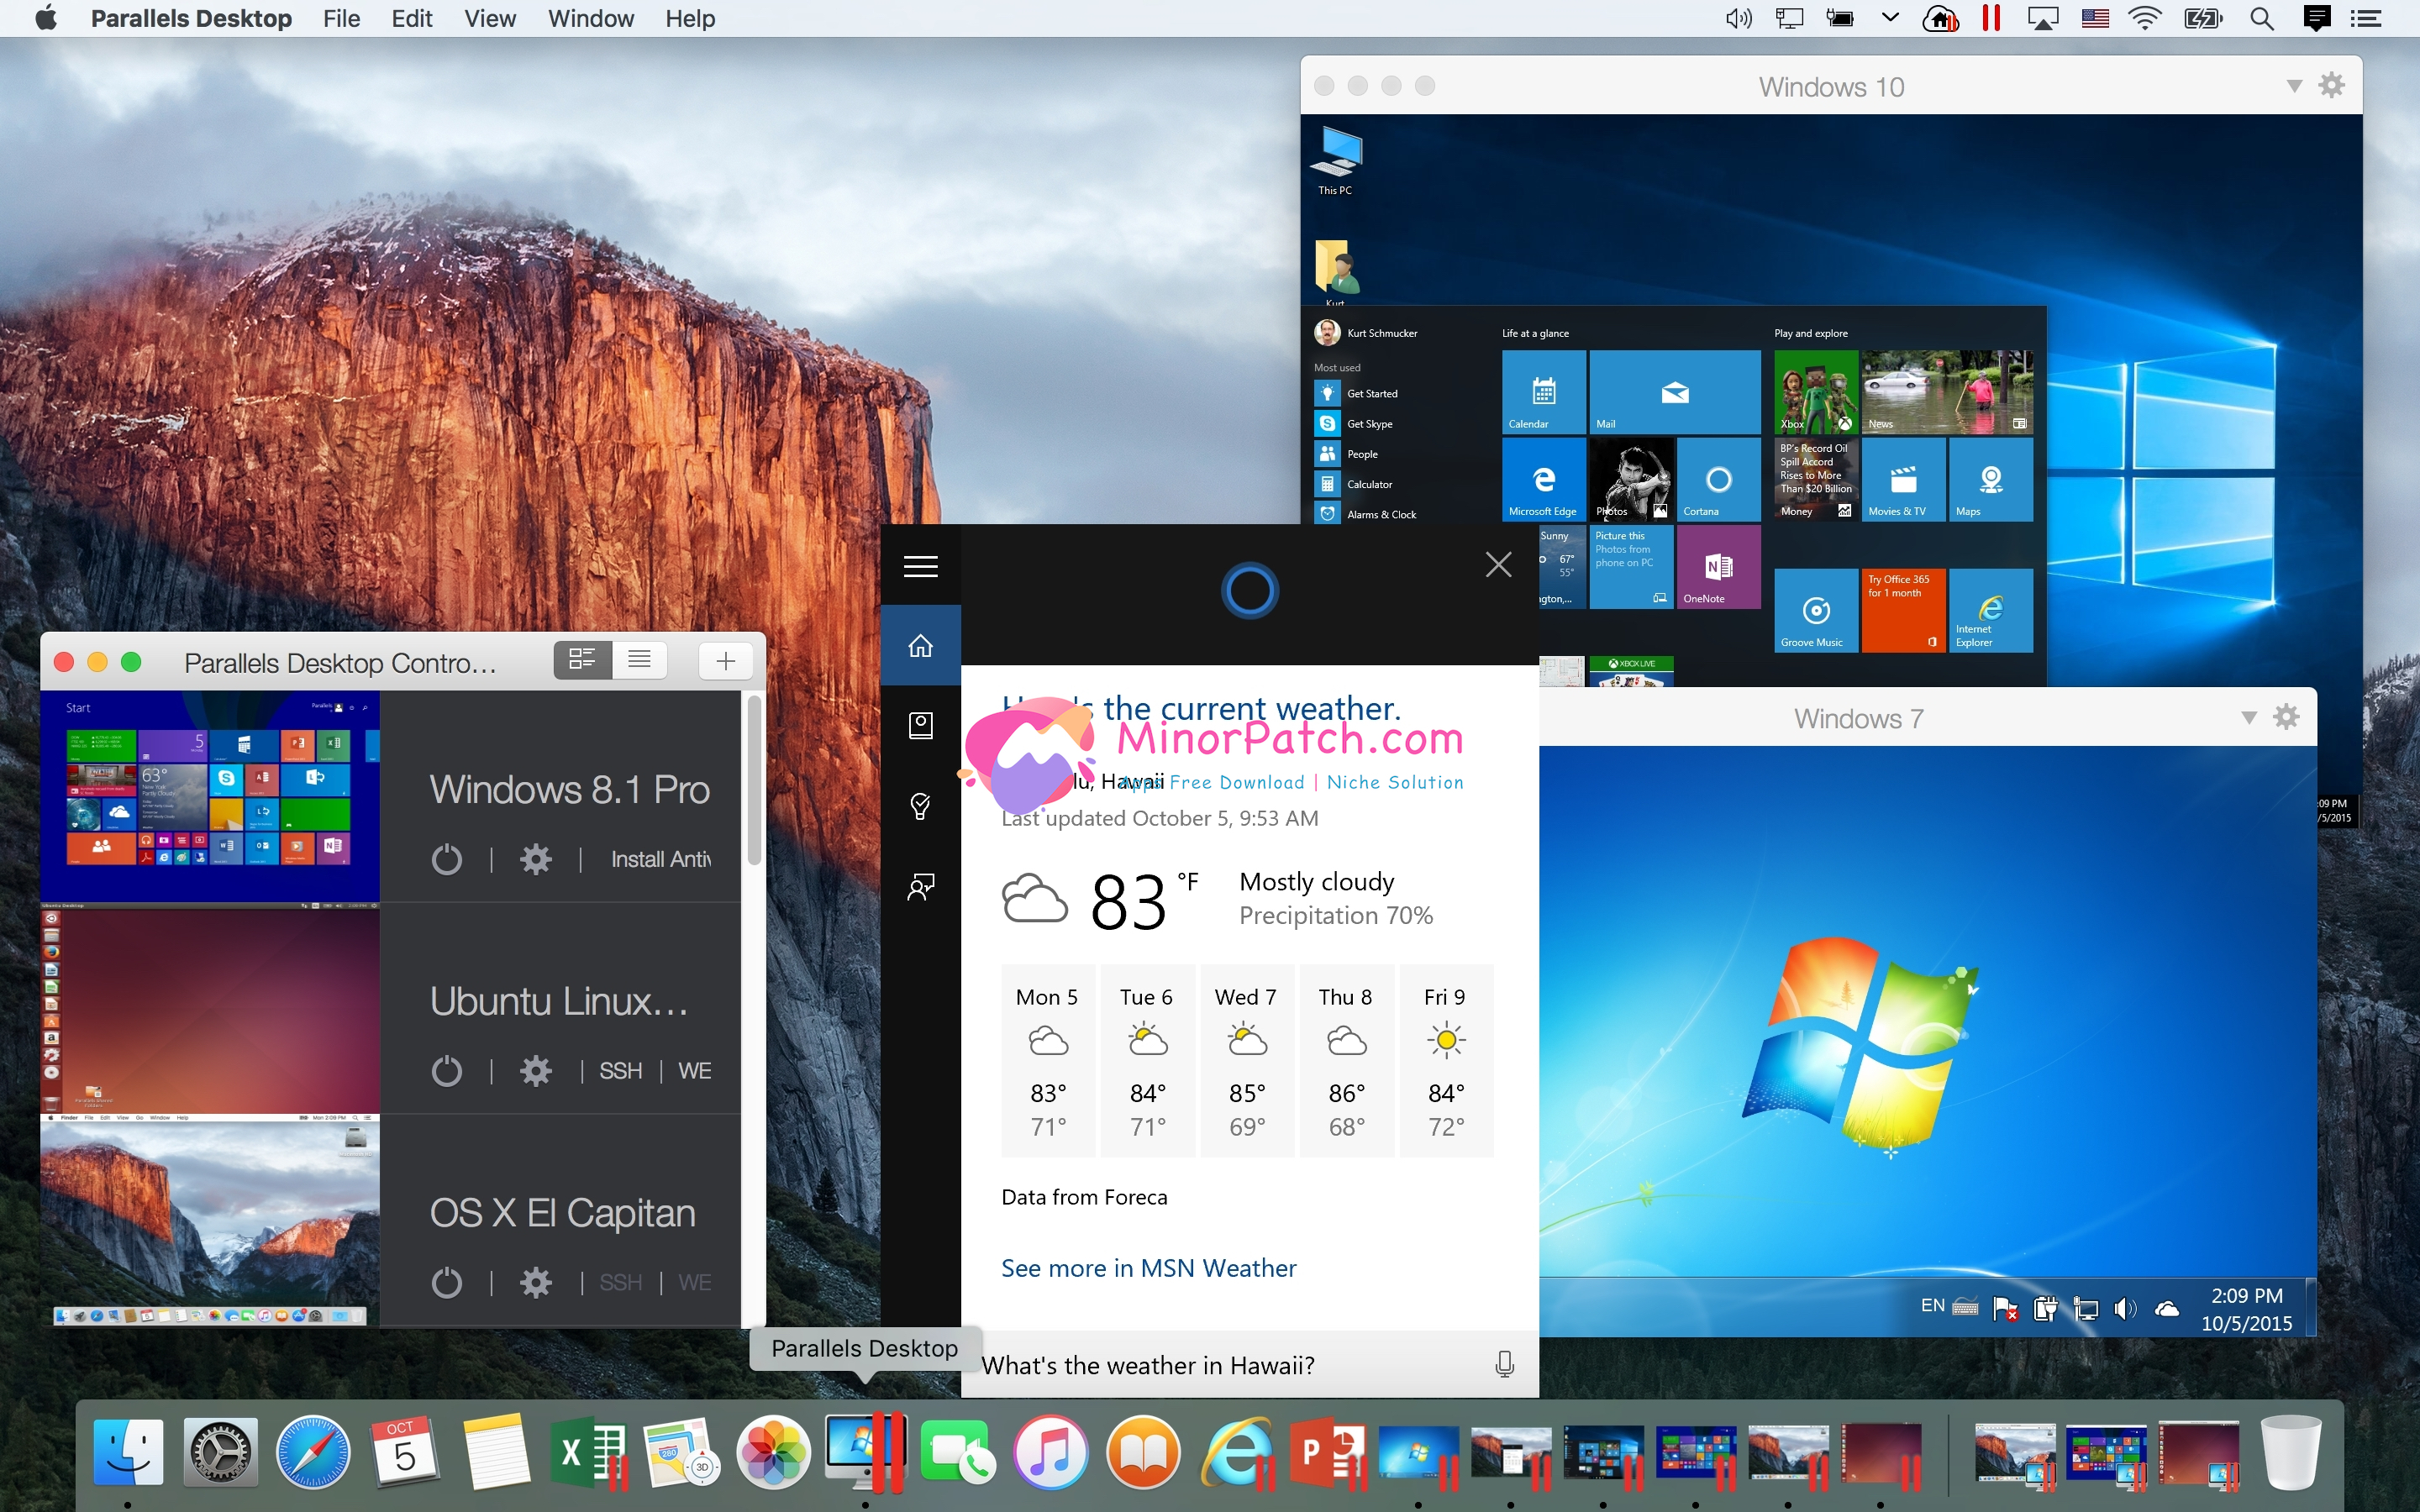 parallels desktop 9 for mac education edition